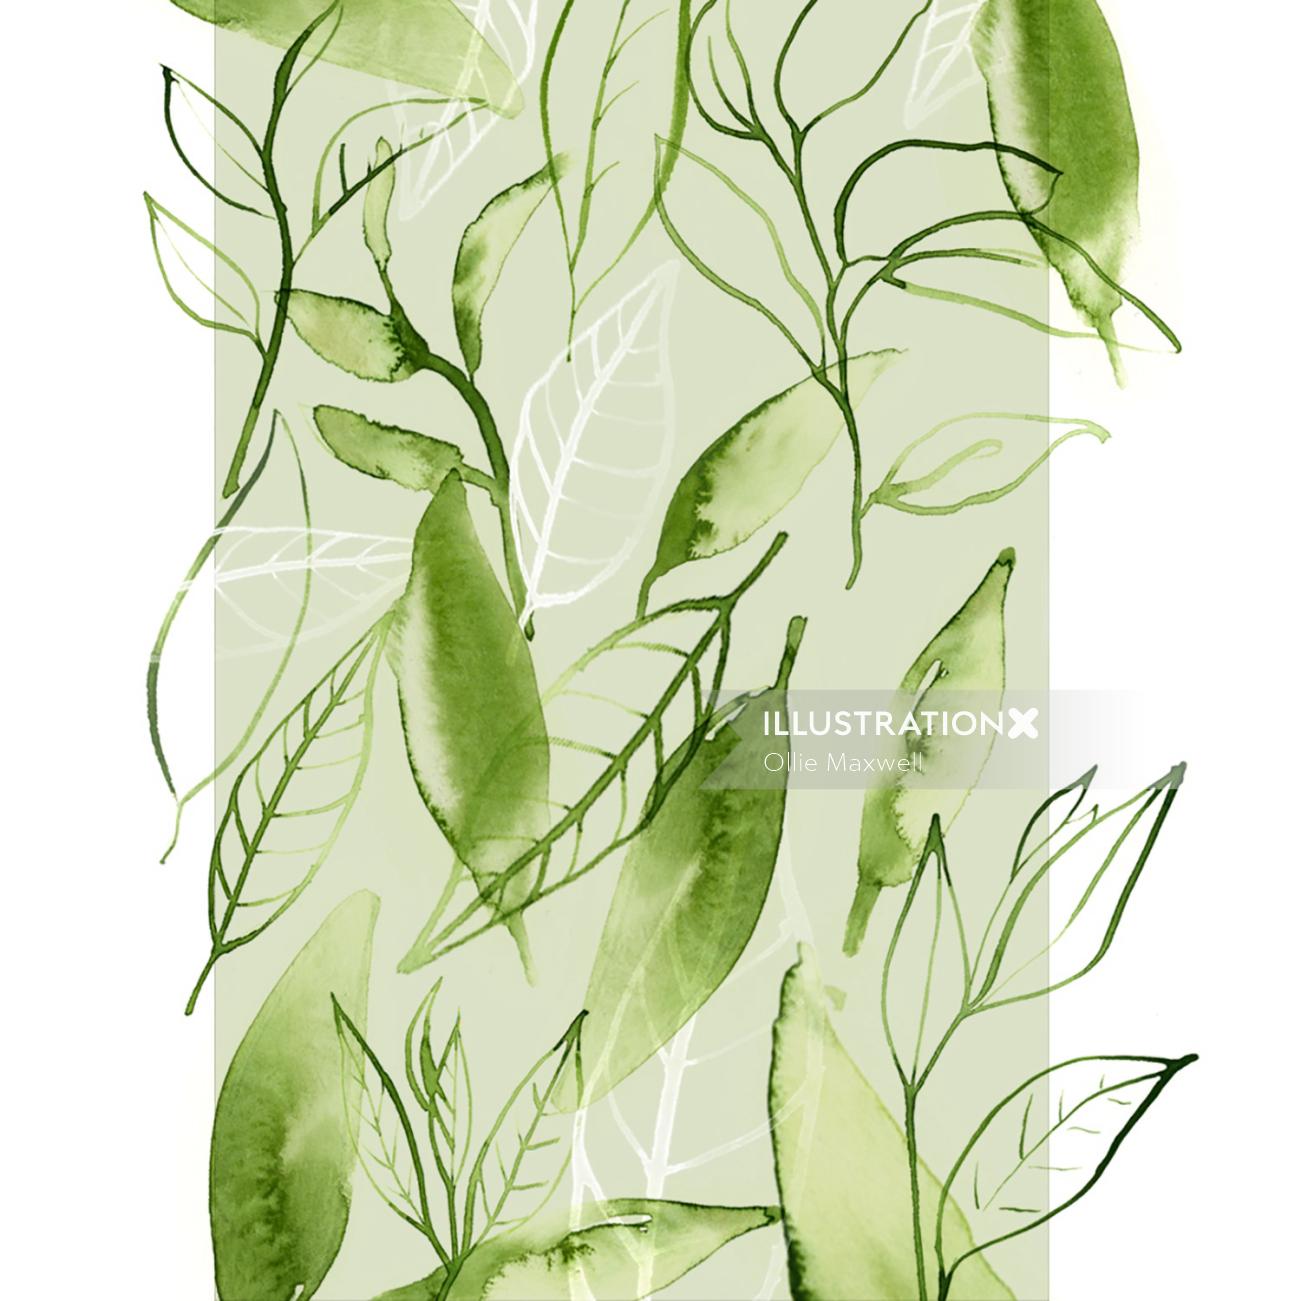 Watercolour art of green tea leaves